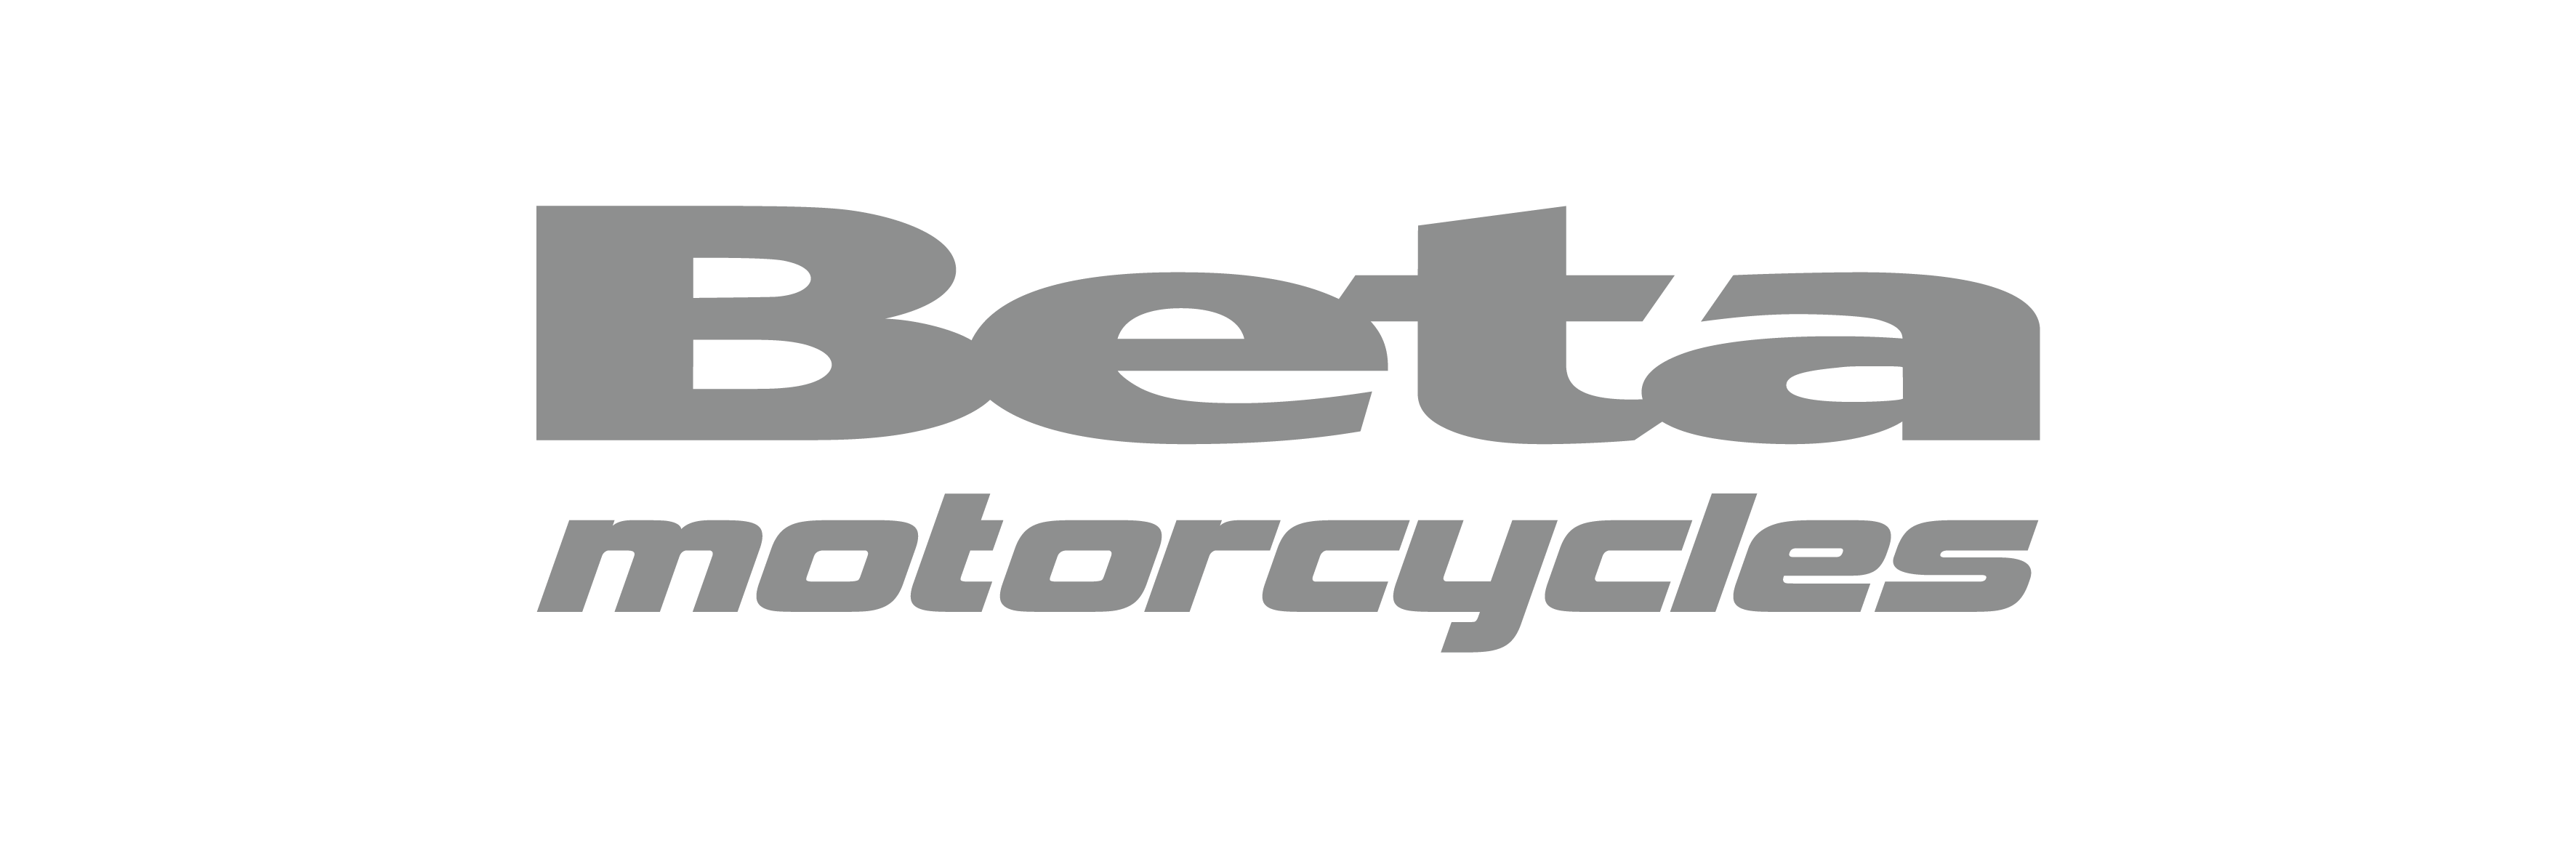 Beta